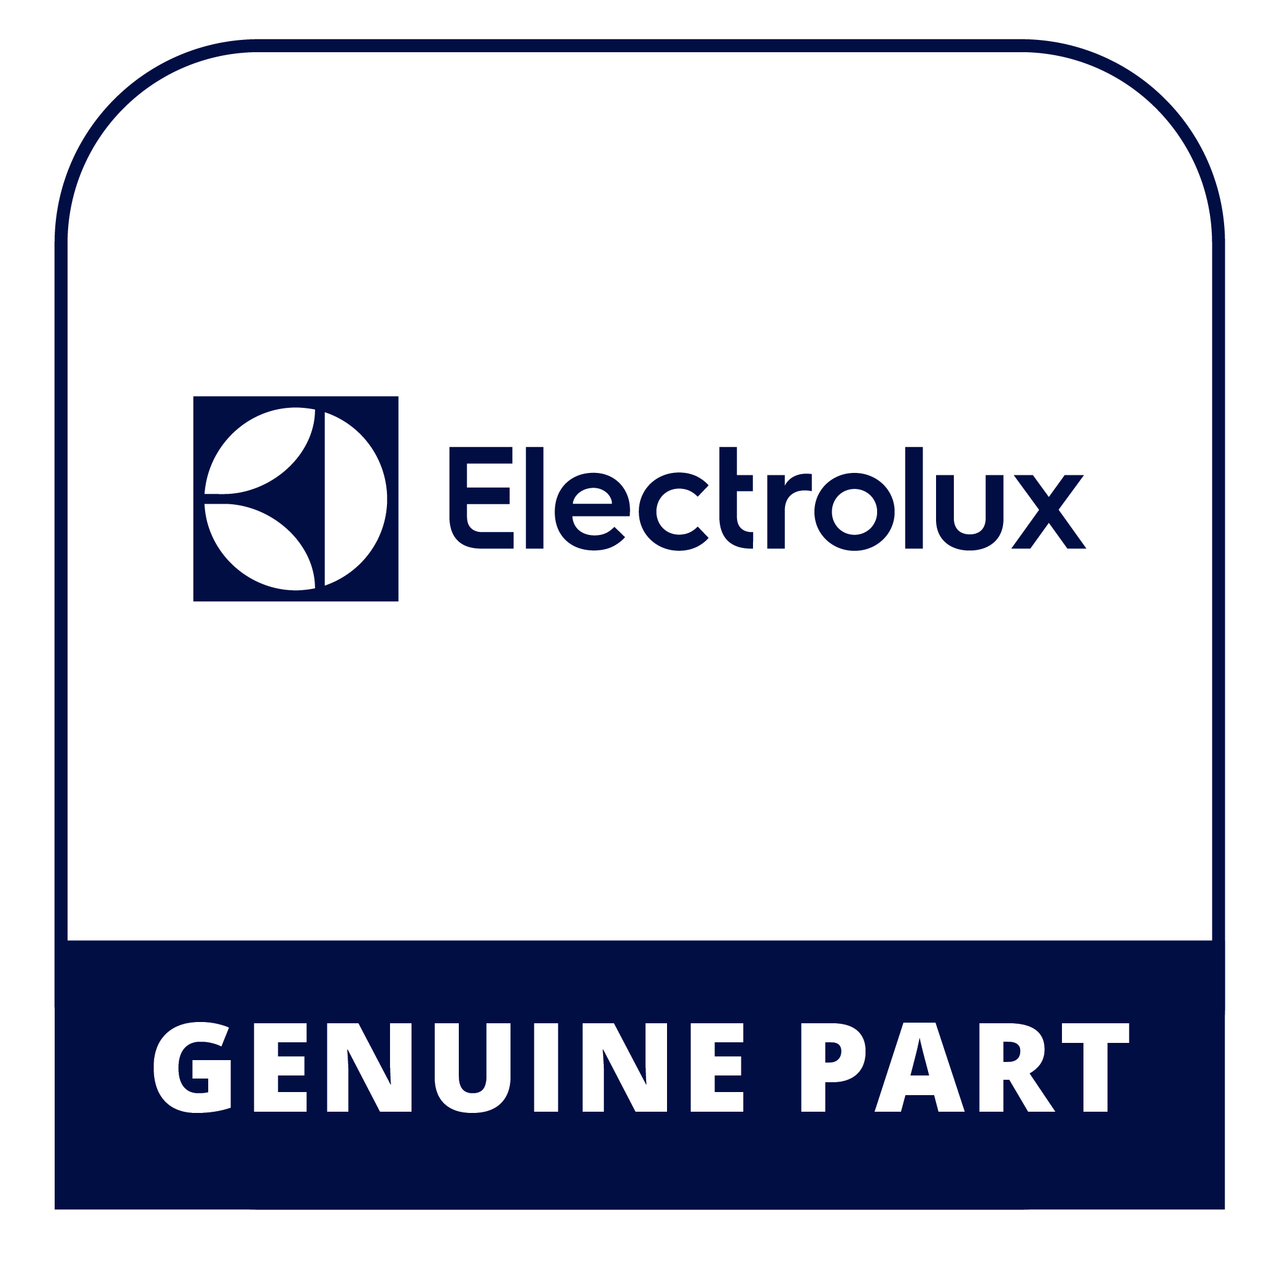 Frigidaire - Electrolux 5304498754 Front Panel Kit - Genuine Electrolux Part